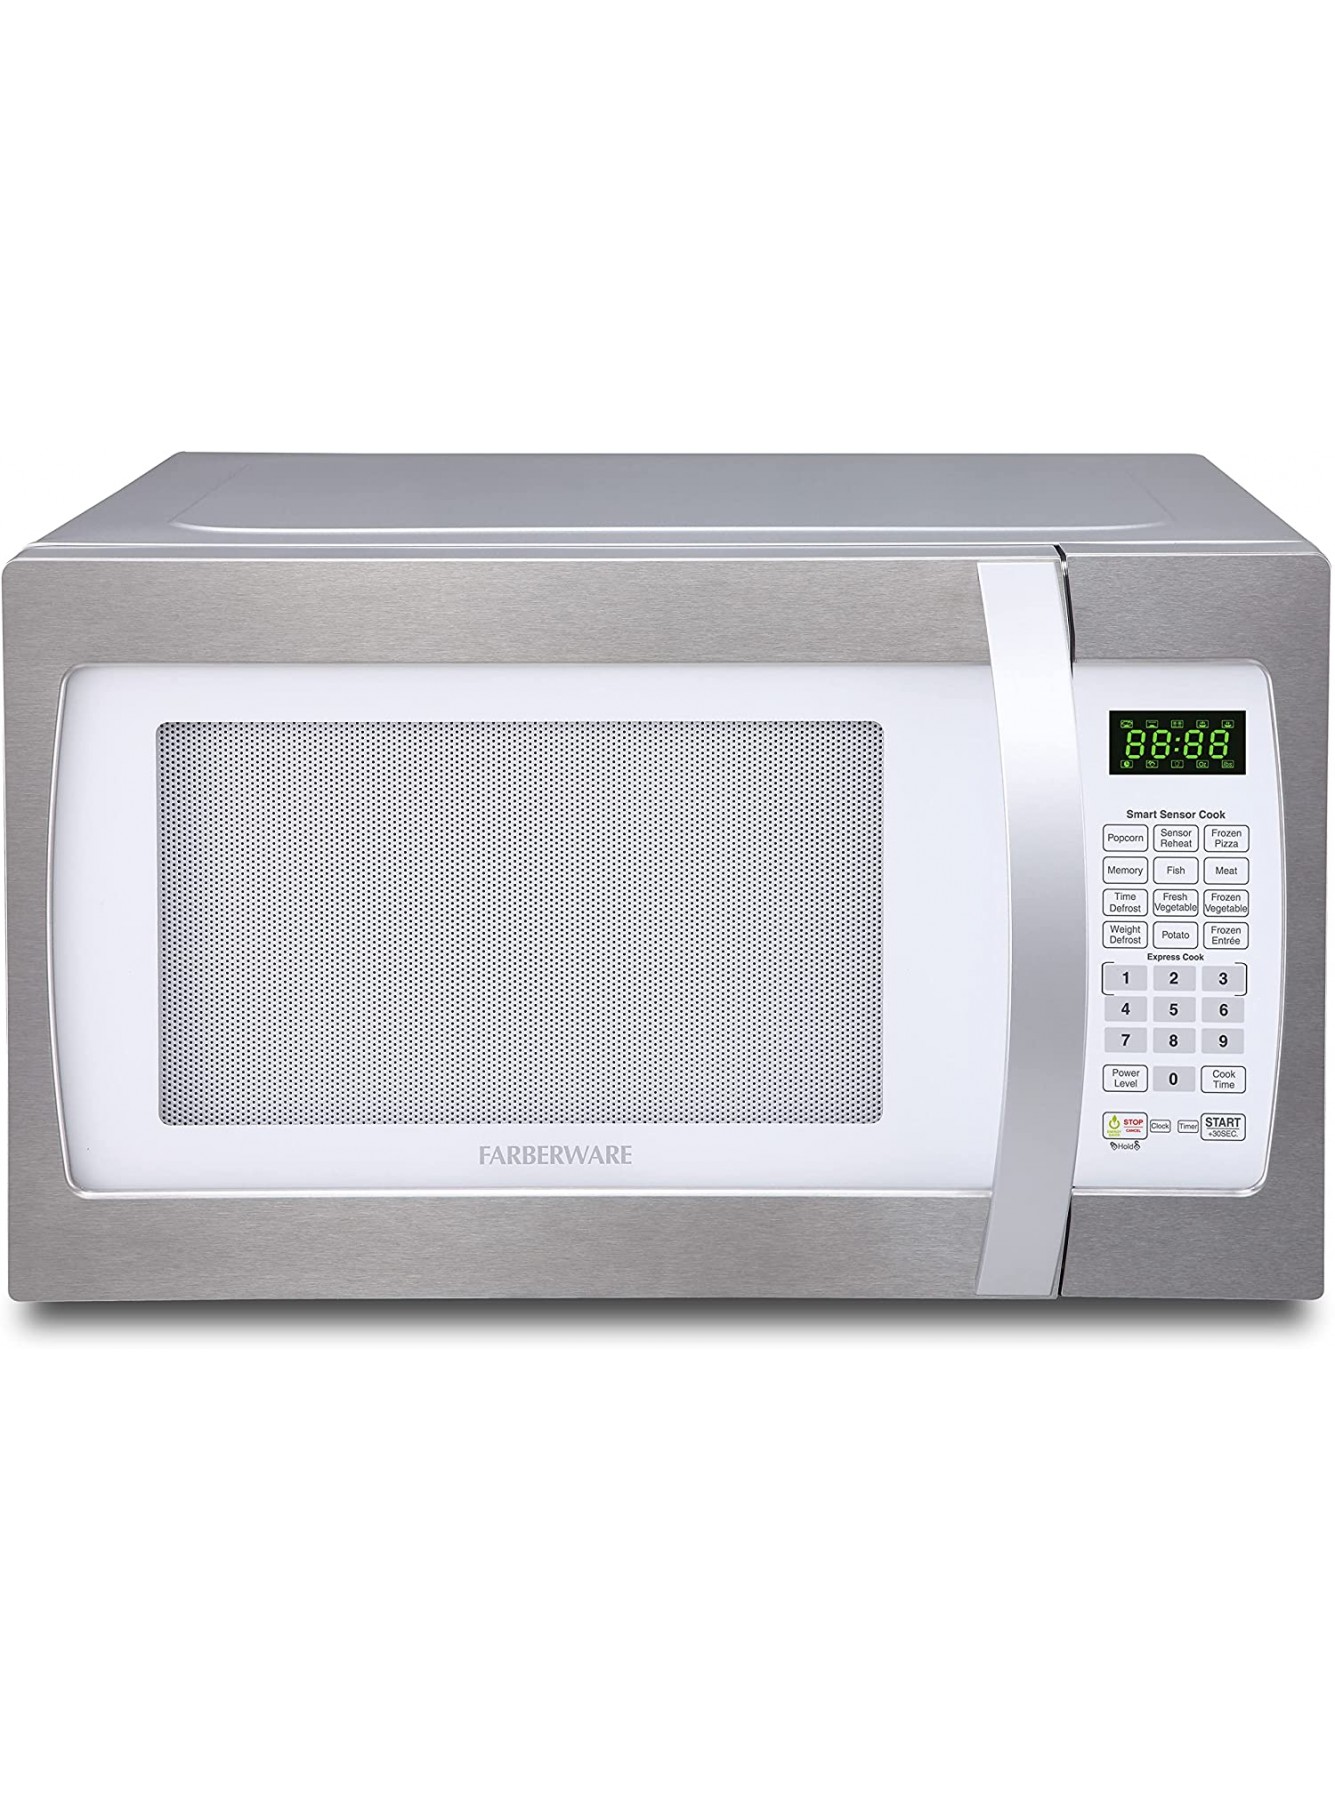 Farberware Countertop Microwave Oven 1.3 Cu. Ft. 1100-Watt with Smart Sensor Cooking ECO Mode and Green LED Lighting Child Lock Easy Clean Black Interior Retro White and Platinum B01MV0E7BR